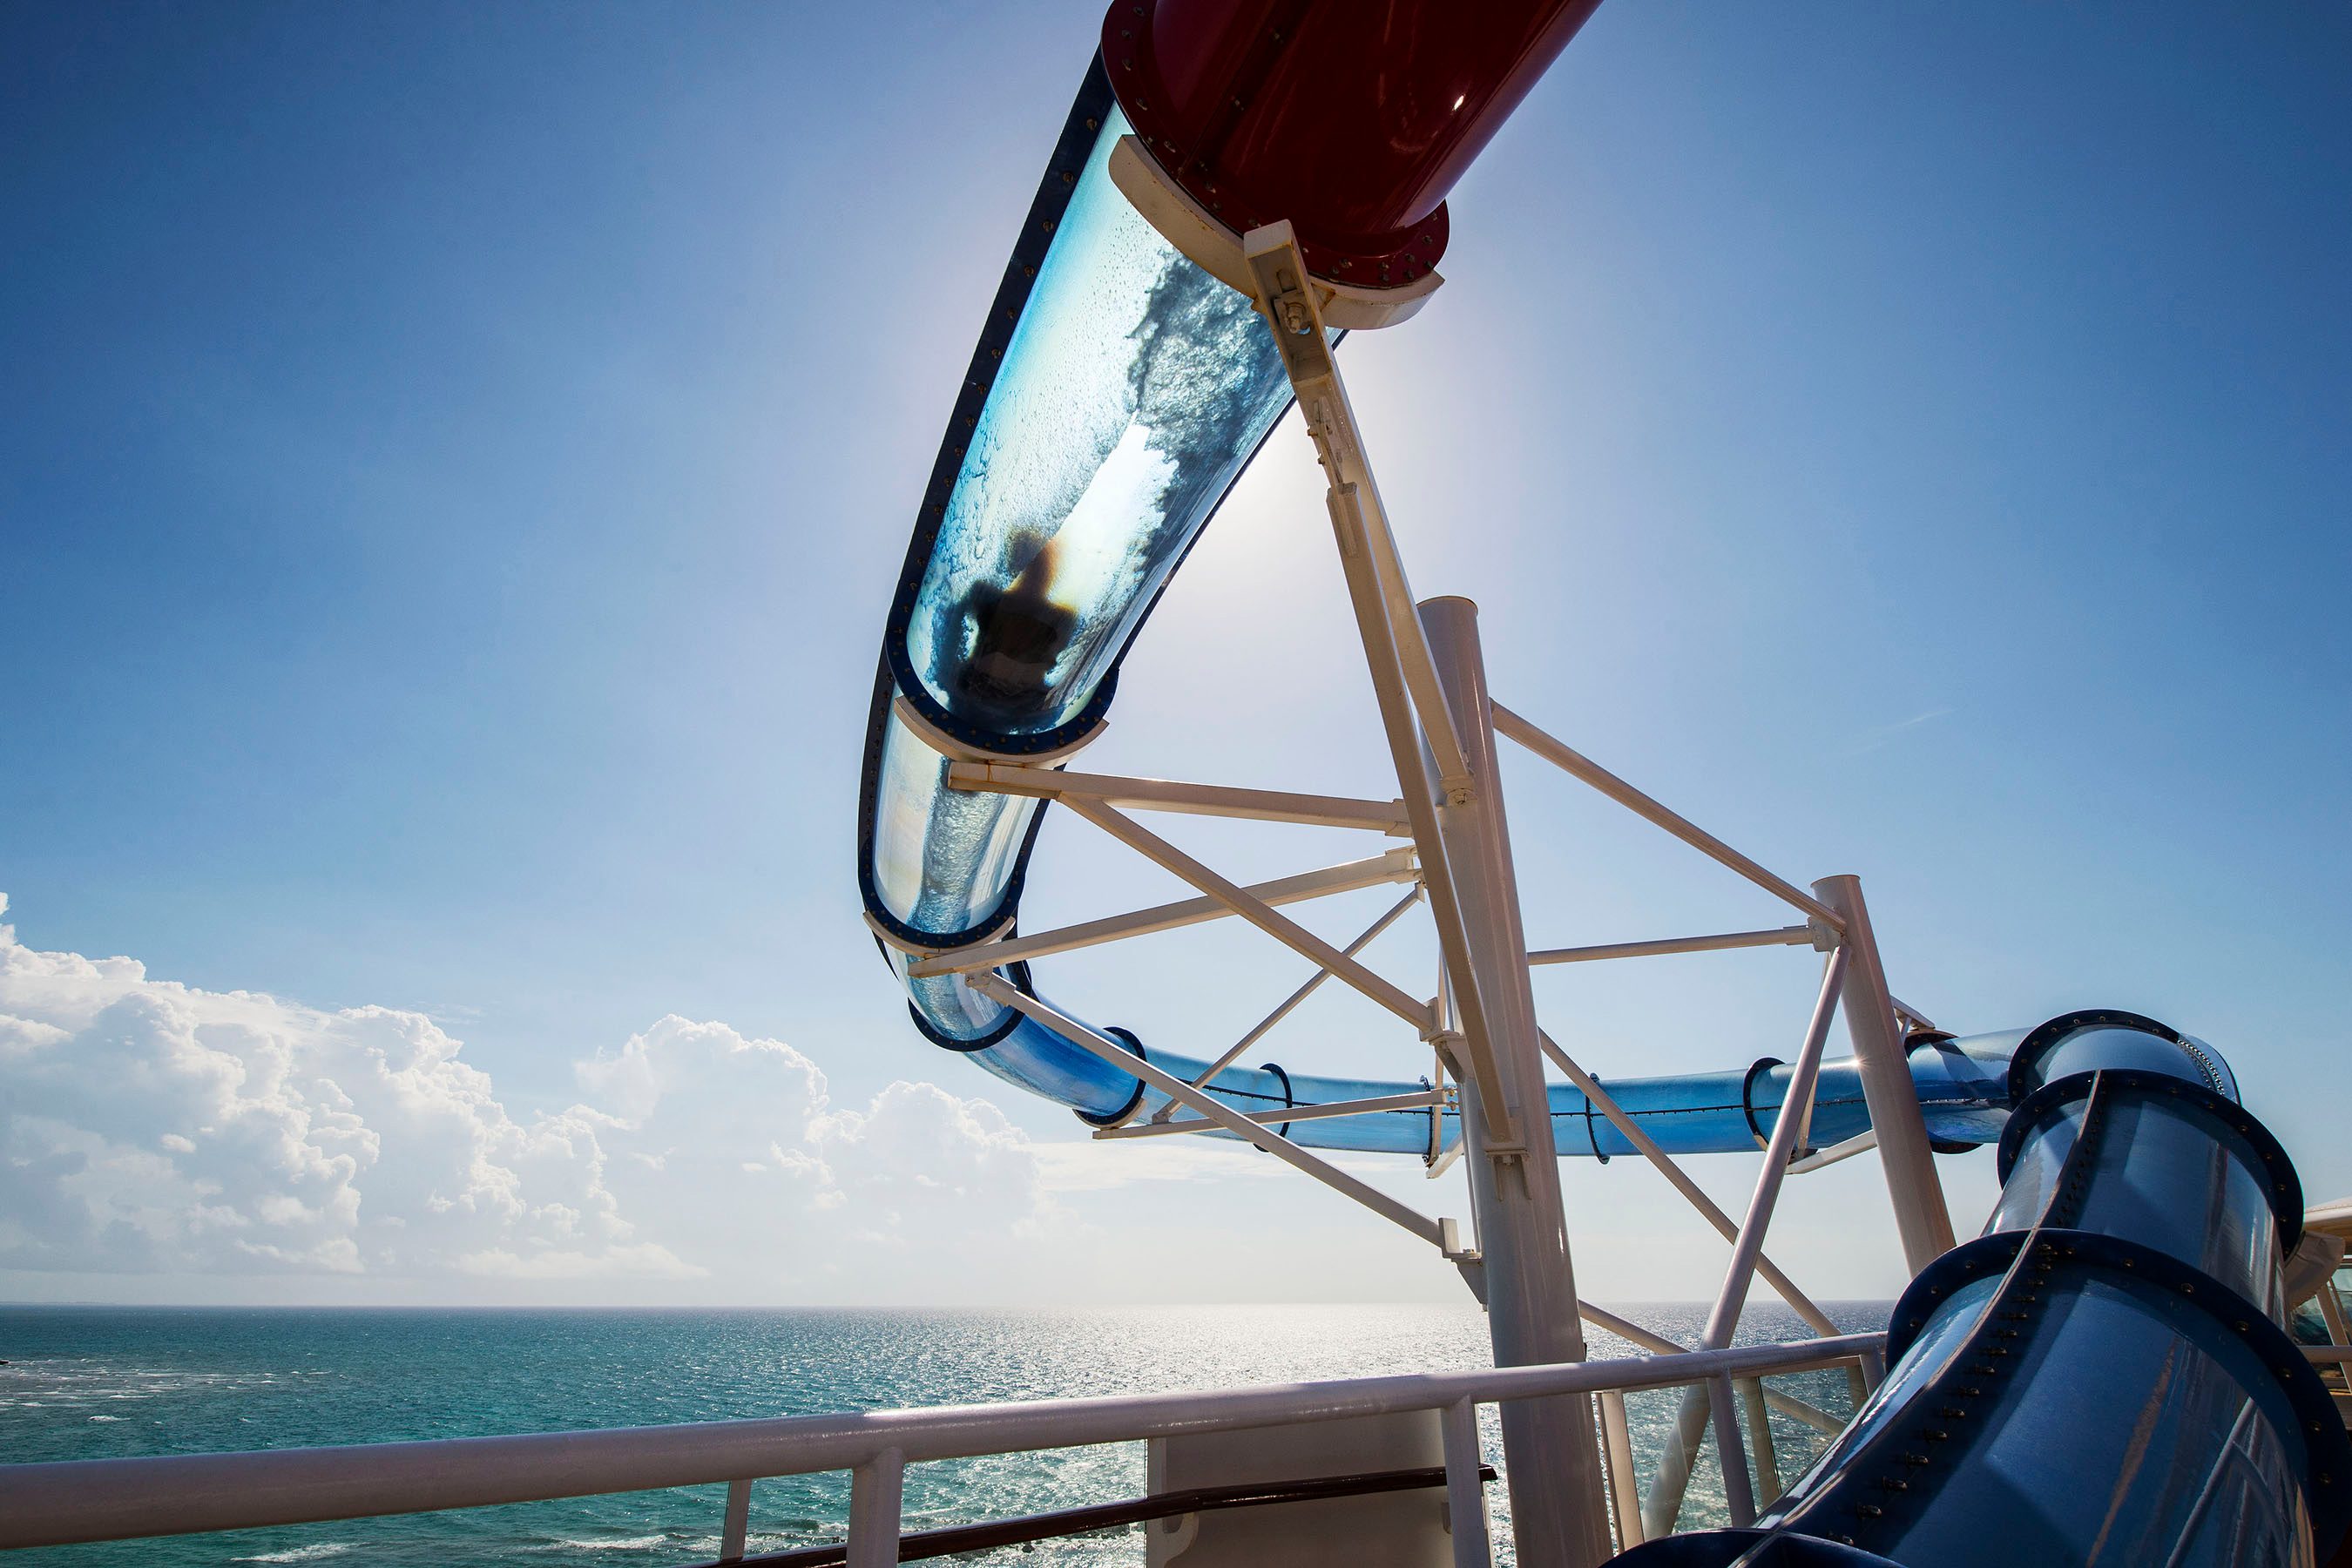 The three-storey AquaDunk slide aboard Disney Magic